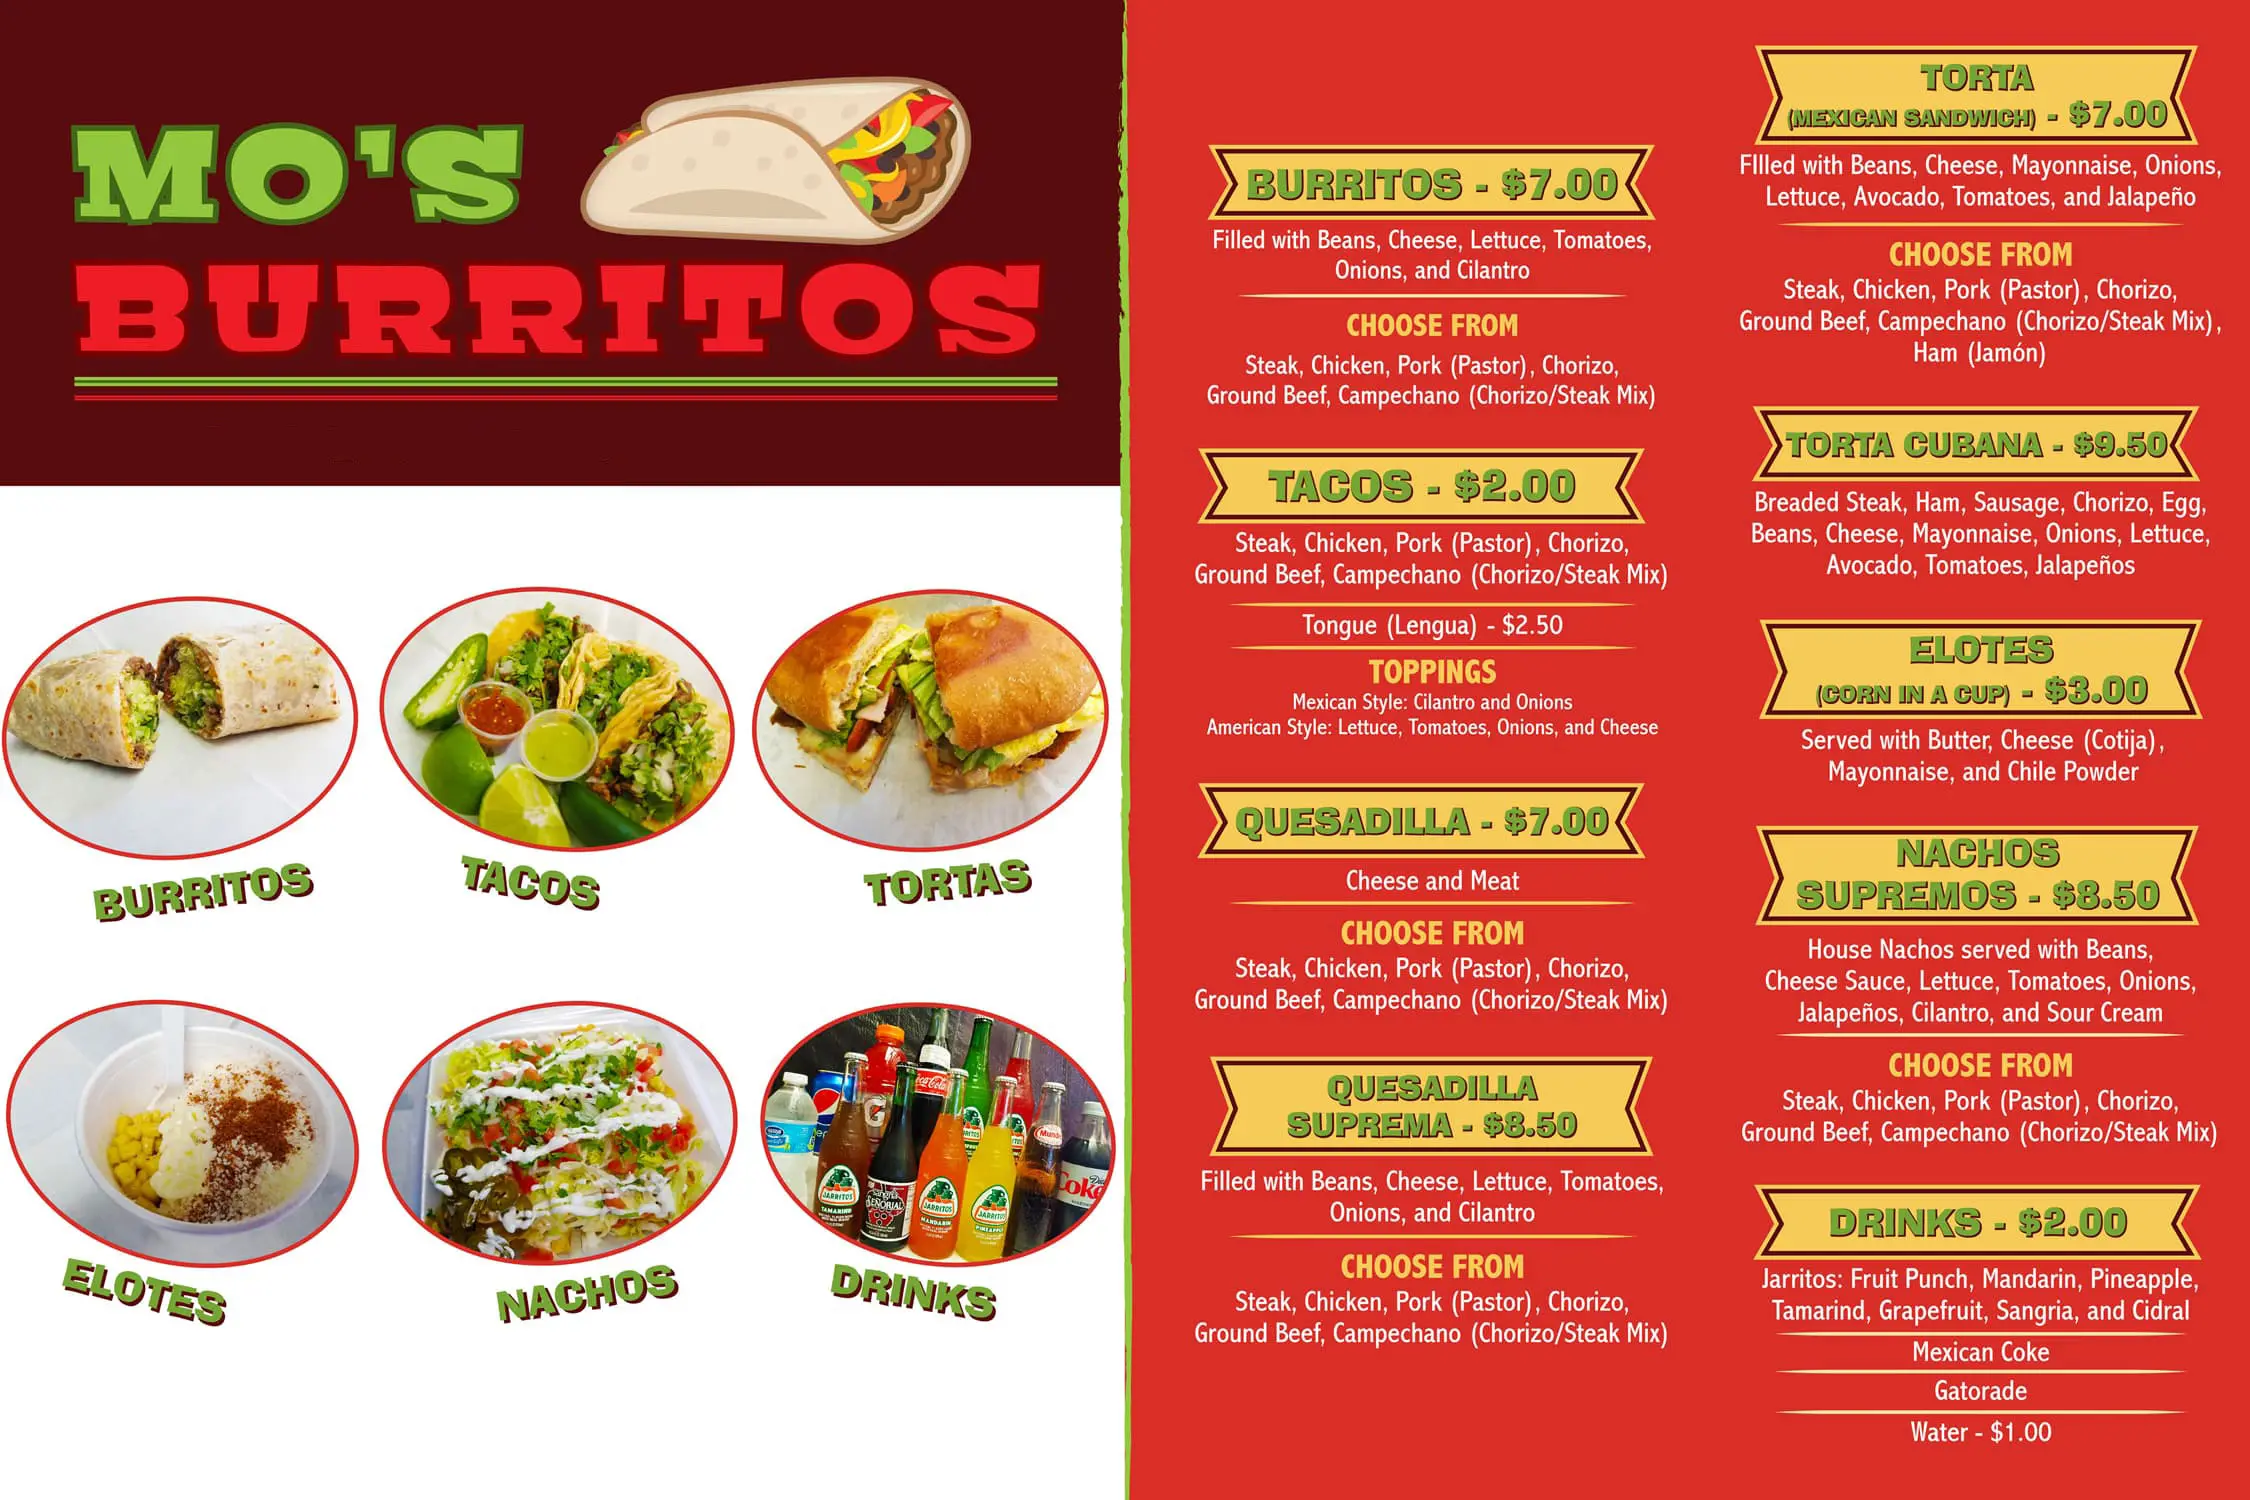 mo's burritos menu board